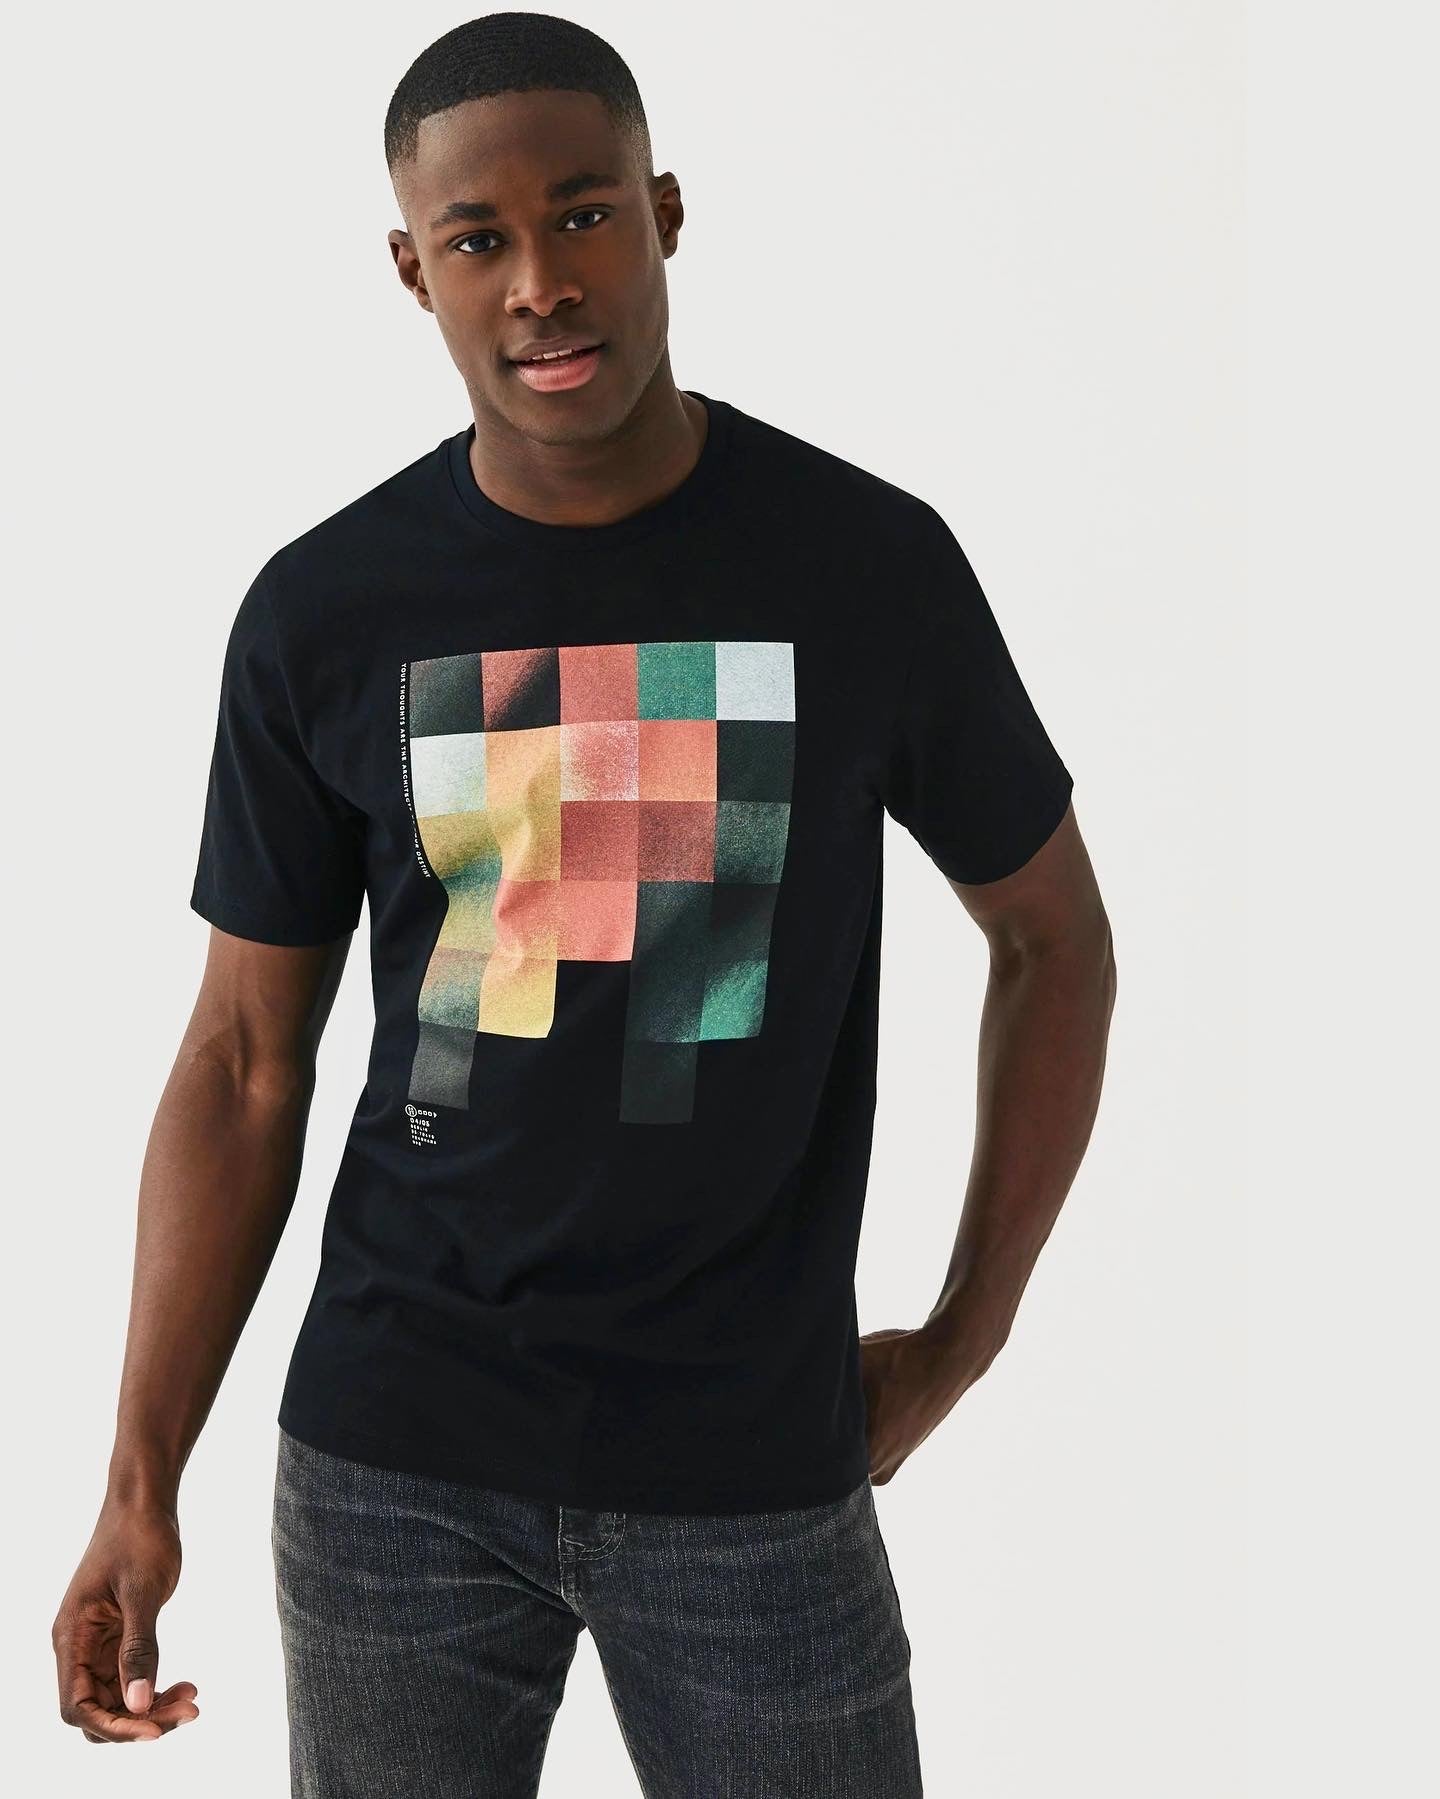 Next Cube T-shirt in black